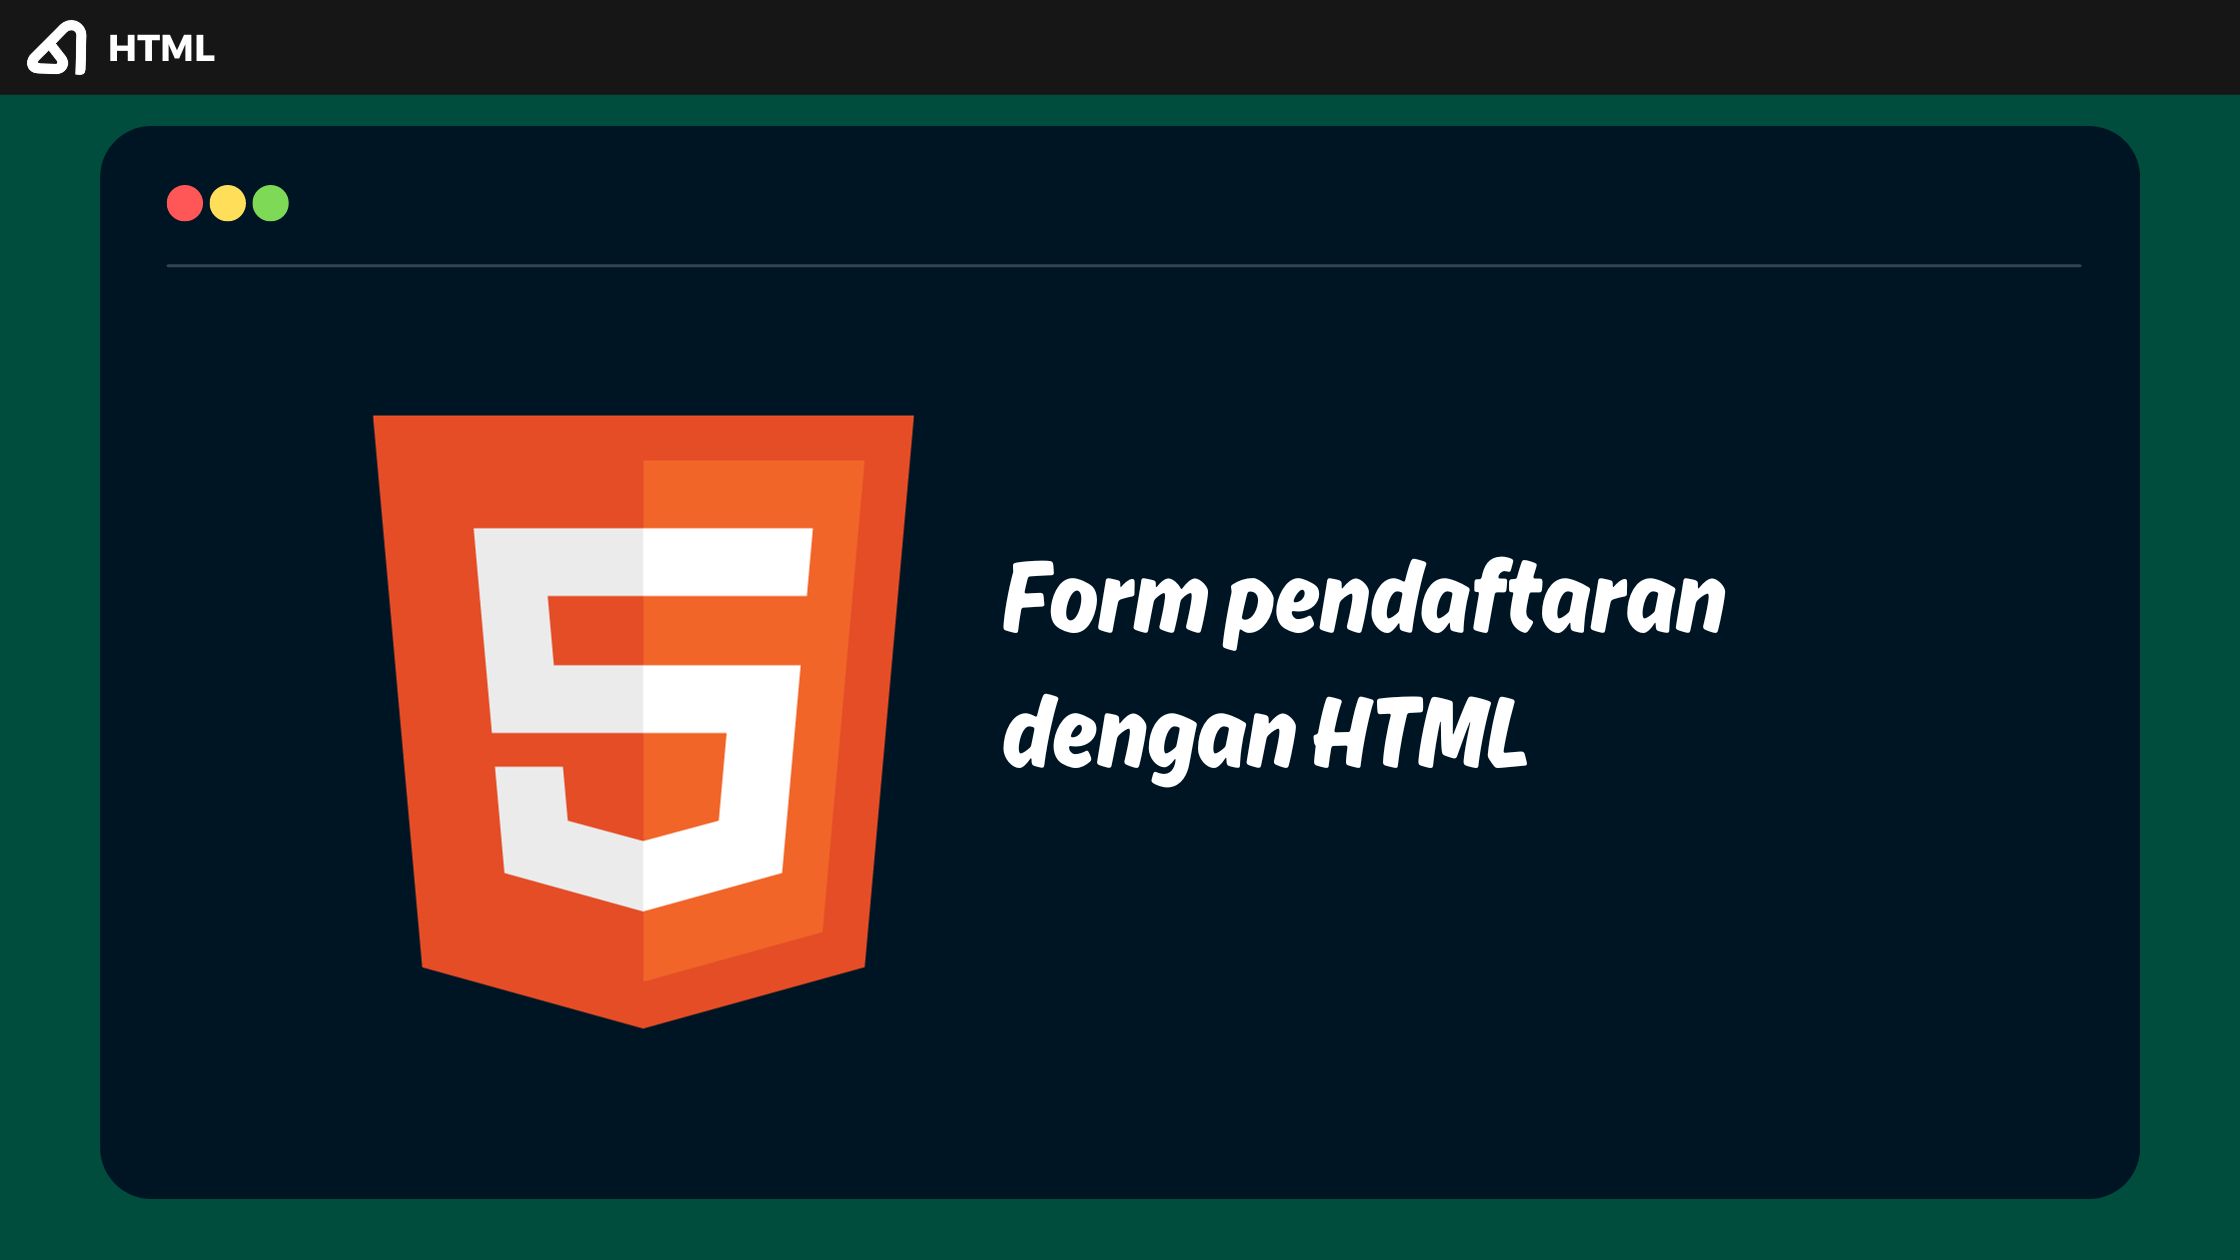 Form pendaftaran dengan HTML